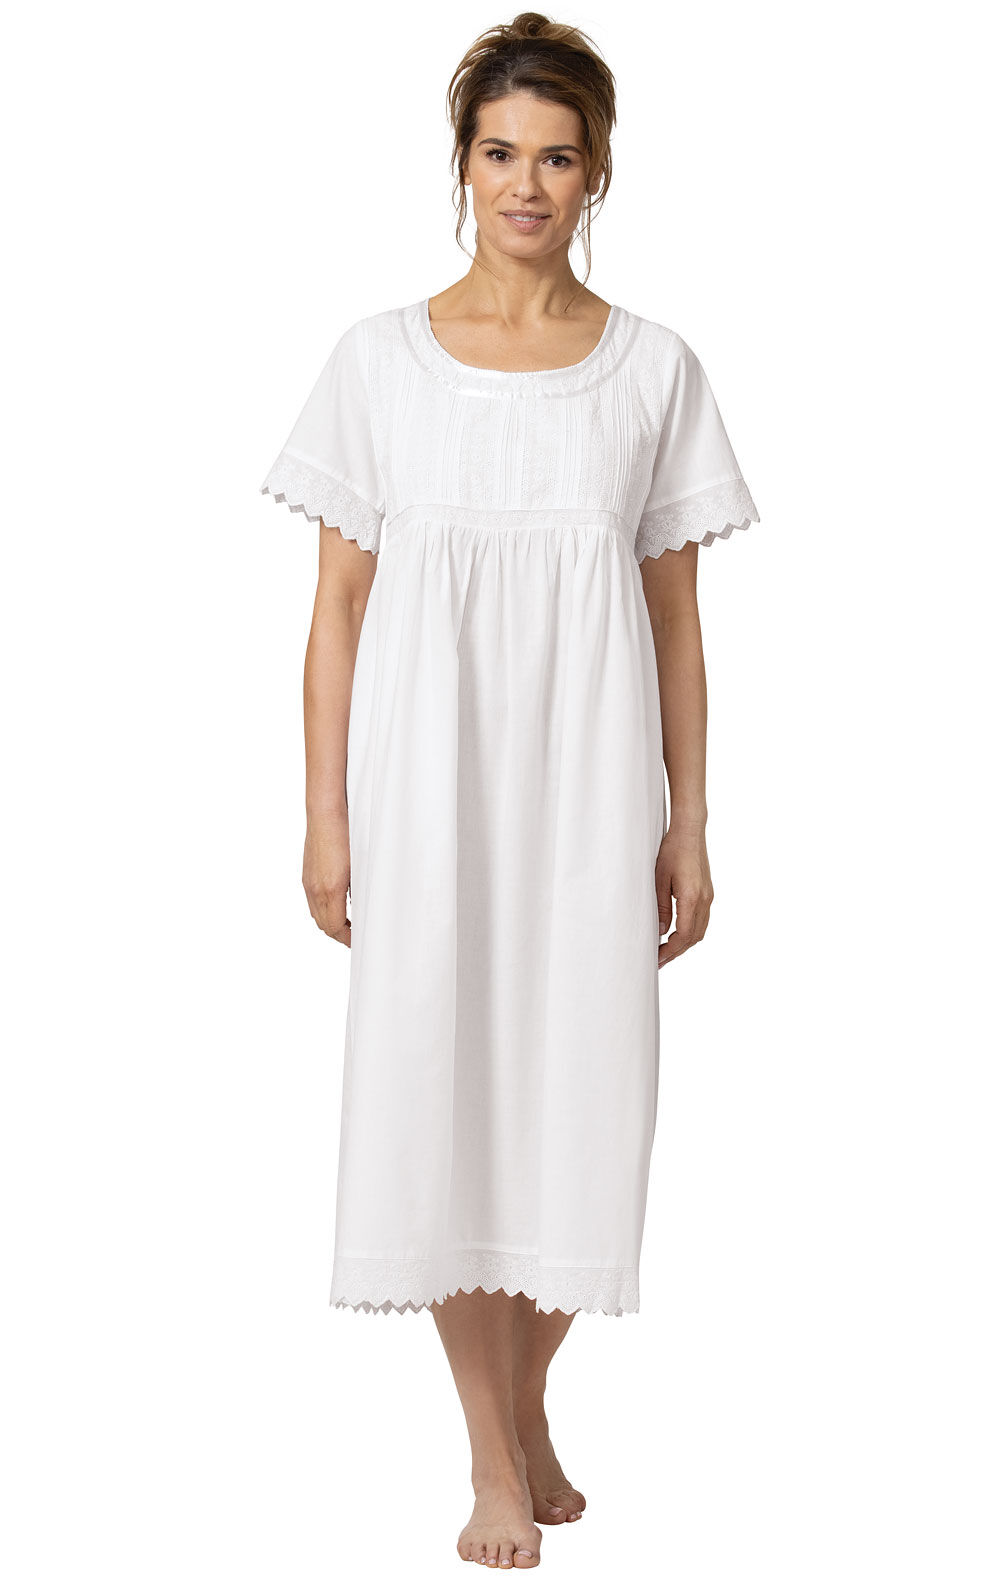 Elizabeth The 1 for U 100% Cotton Short Sleeve Ladies Nightdgown